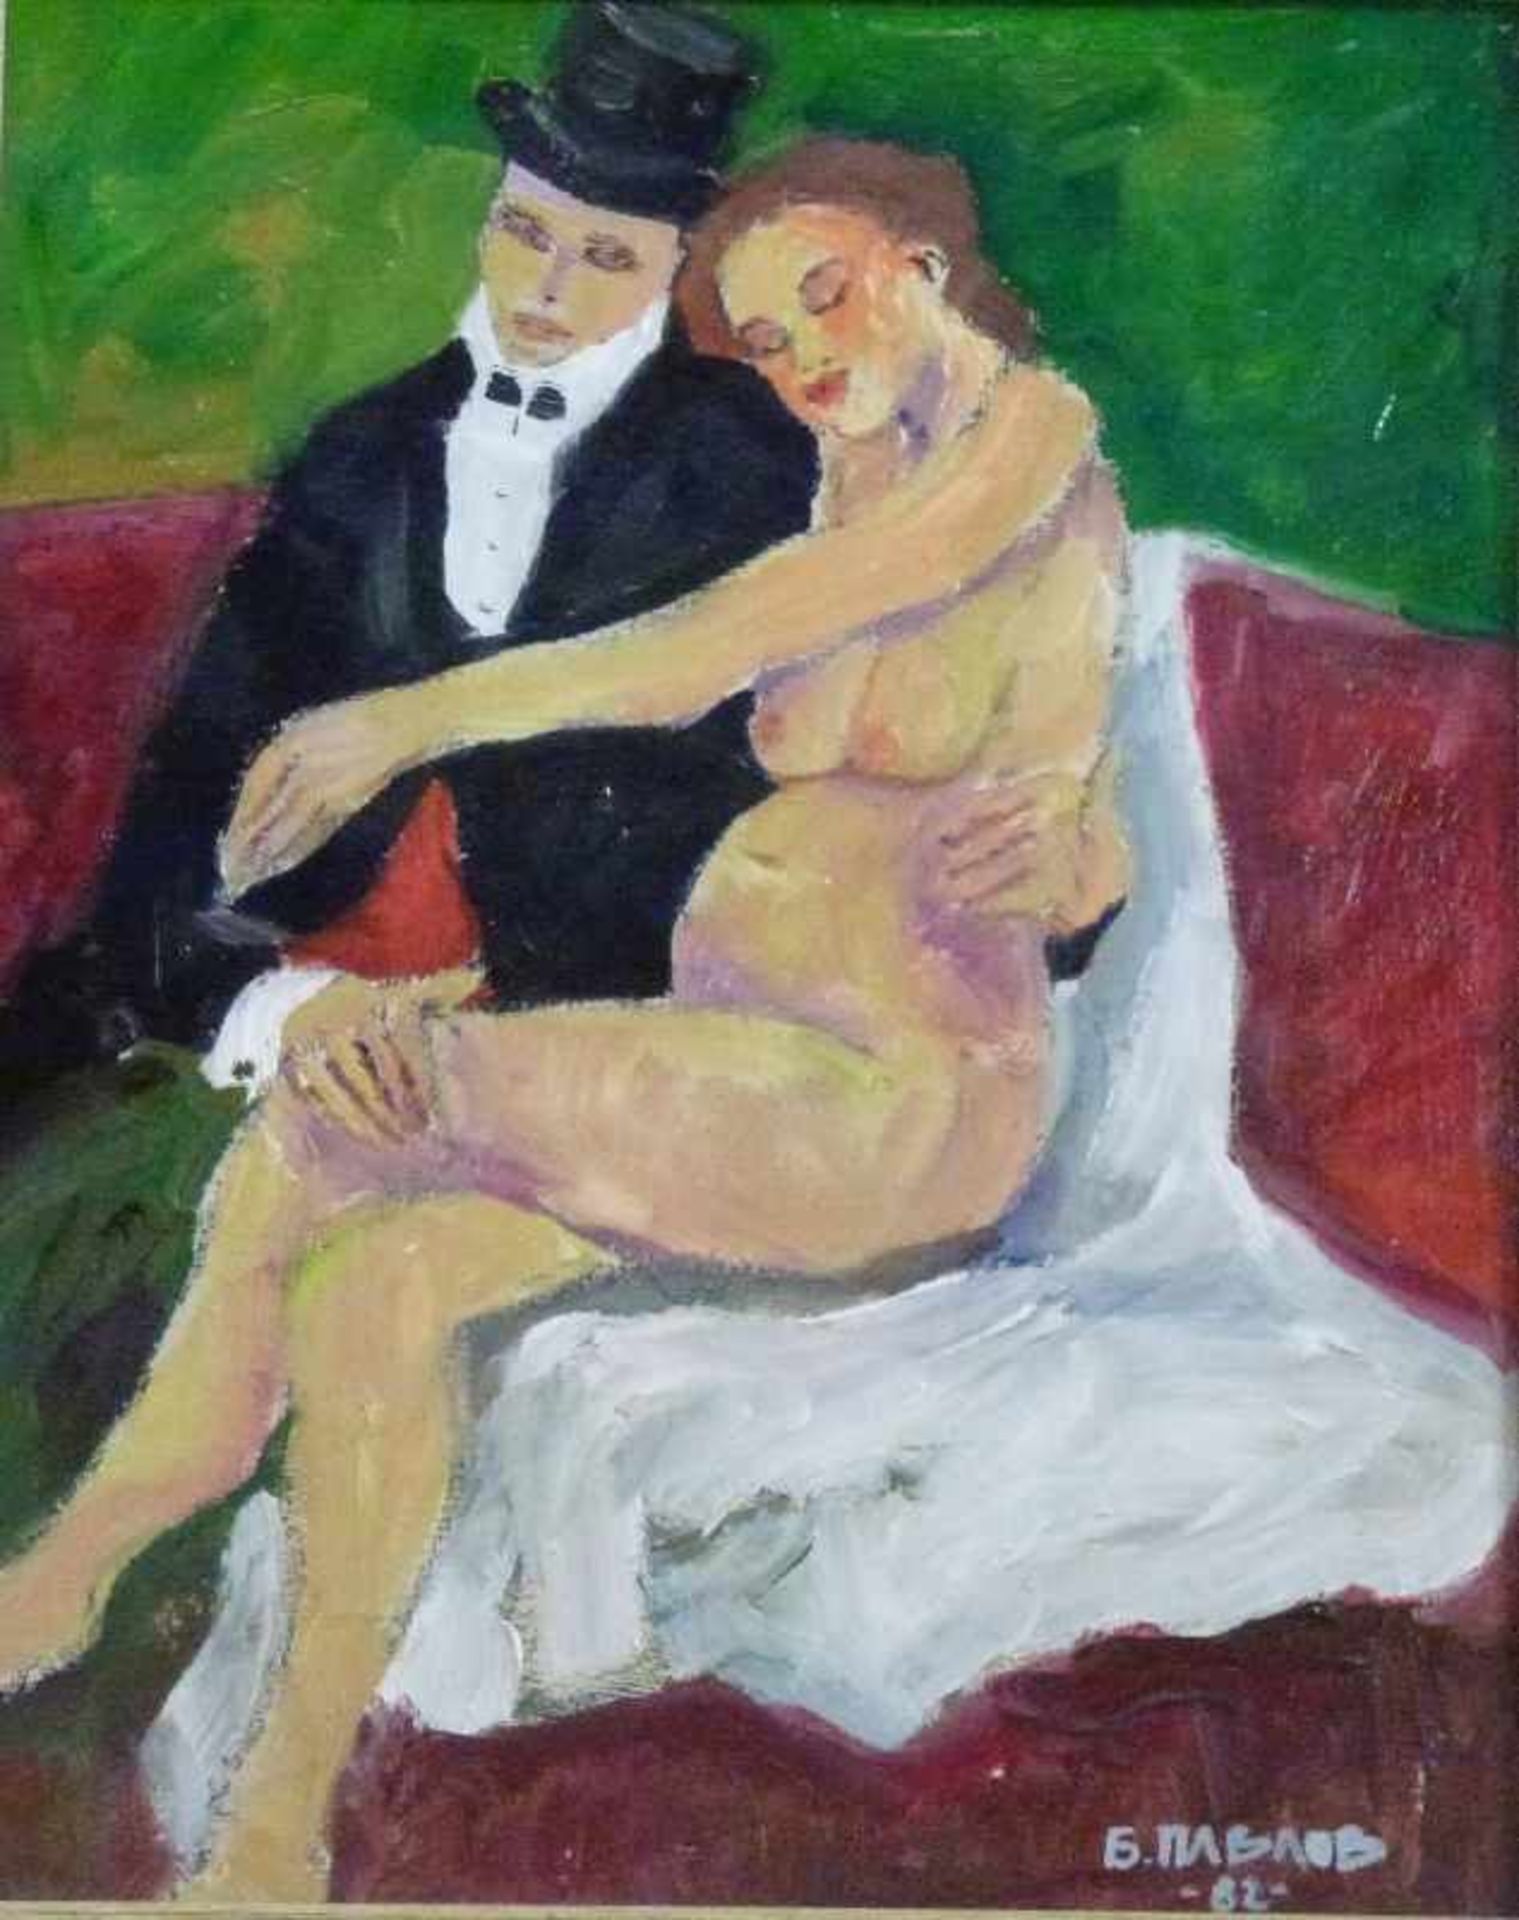 "Trost im Pariser Atelier", Boris Pavlov (1928-2005) Öl/Platte, sign., auf rotem Sofa sitzendes